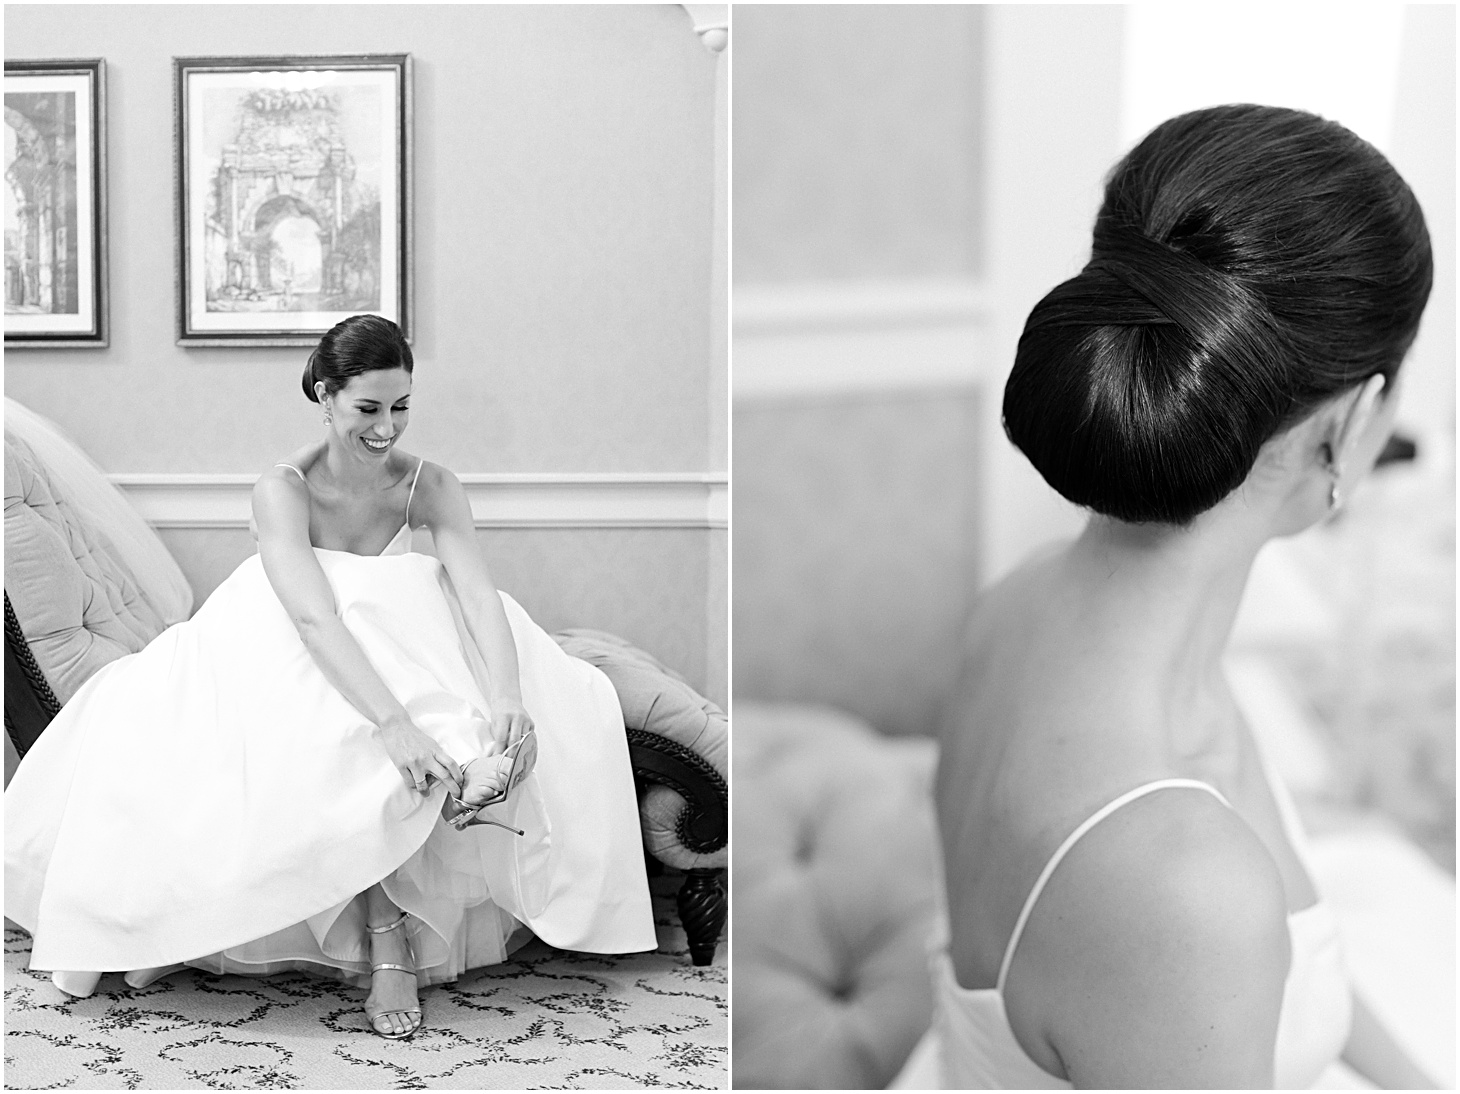 Amsale Wedding Gown, Manolo Blahnik Shoes, Hair by Jewel Hair Design at Willard Hotel - A Thoroughly Washingtonian Wedding at Meridian House in DC by Sarah Bradshaw 